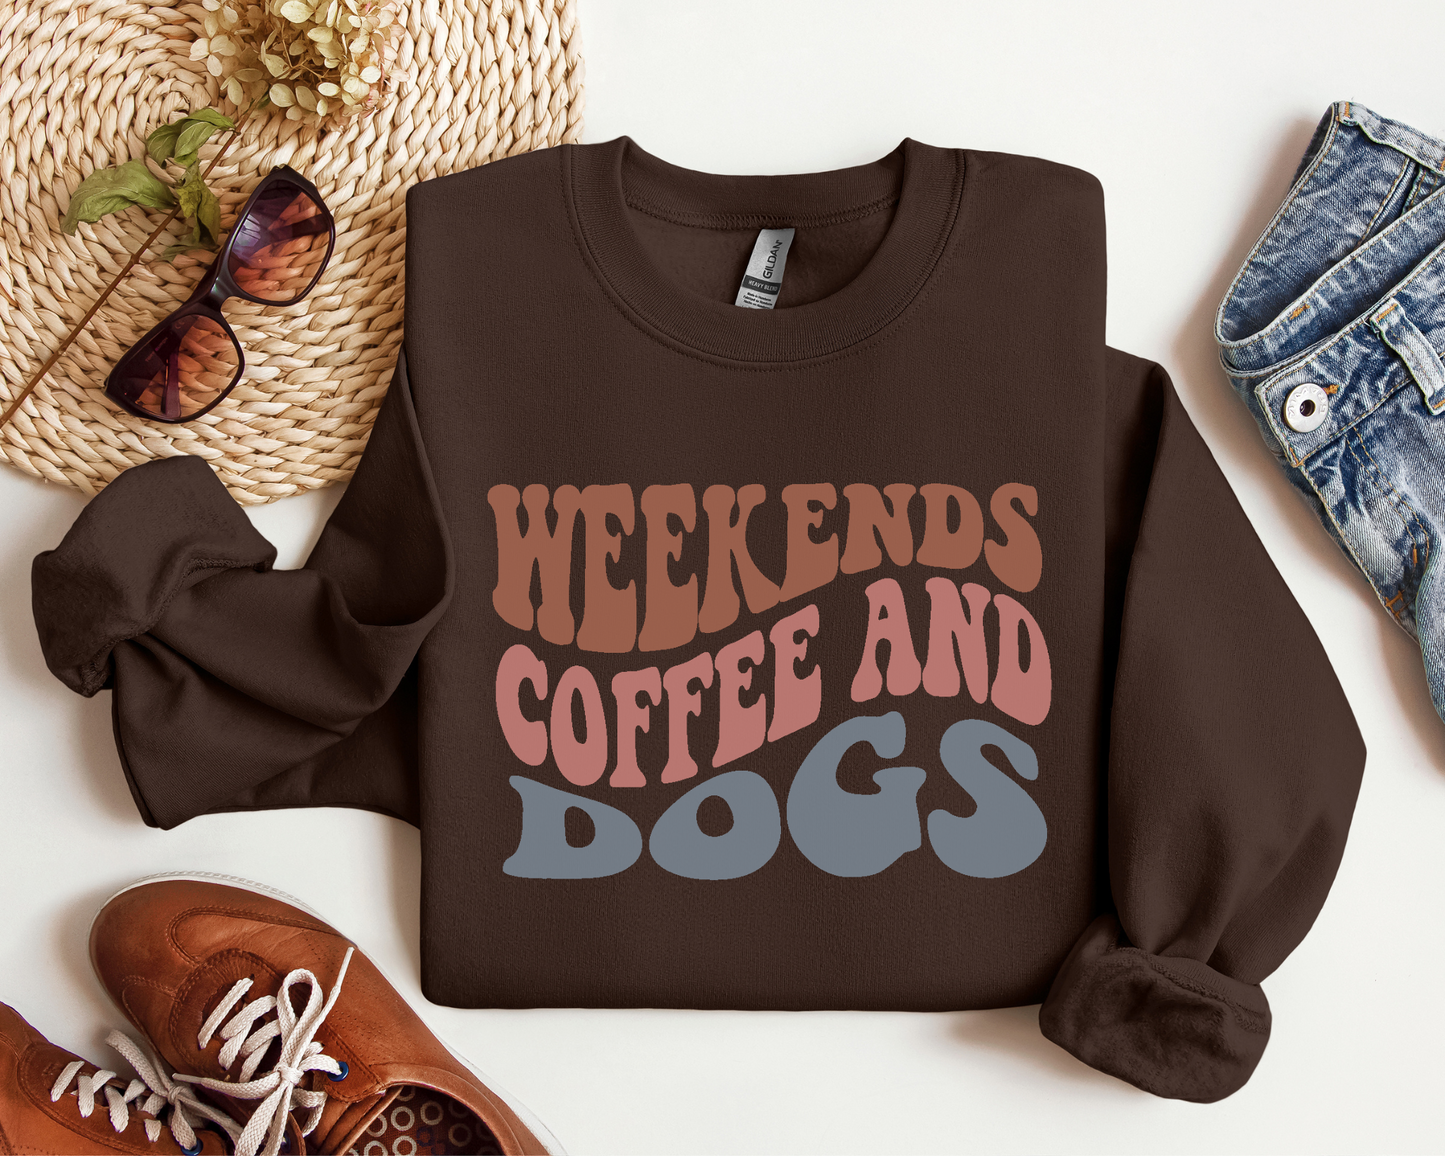 Weekends, Coffee And Dogs Sweatshirt, Dark Chocolate